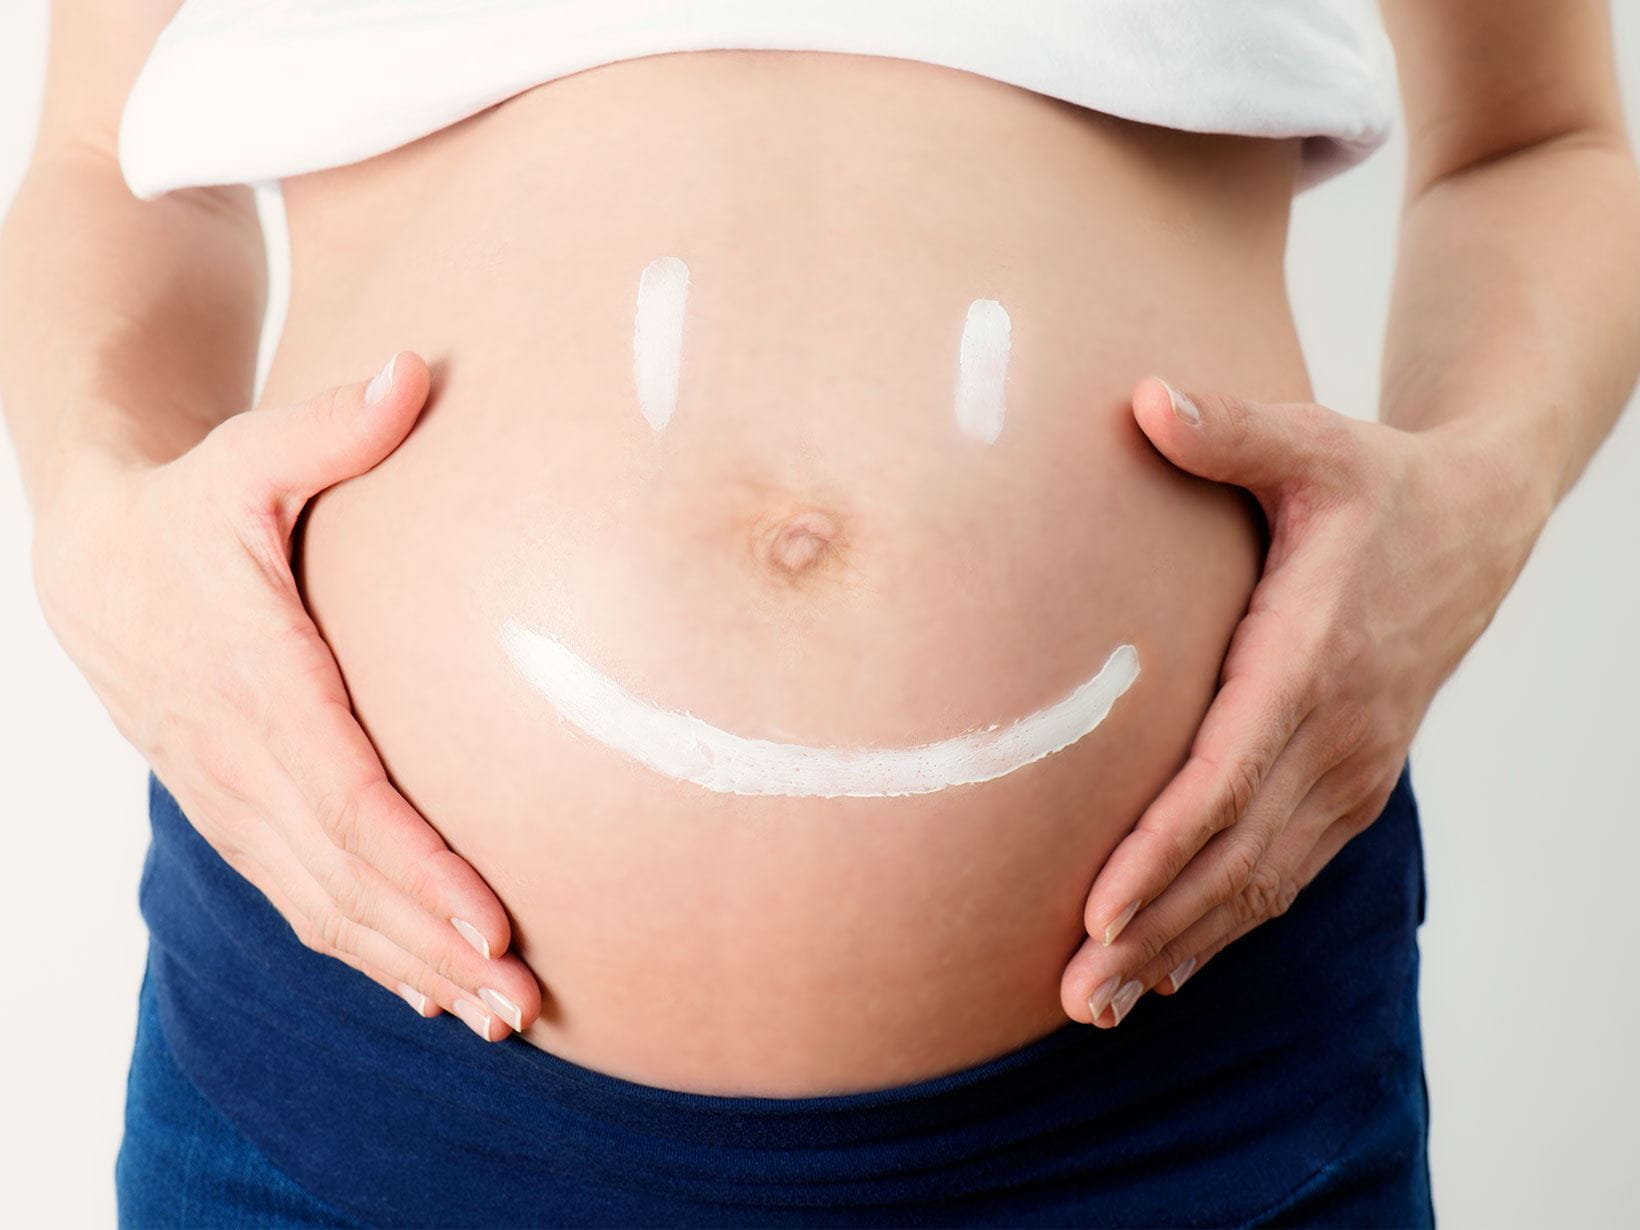 Evolution ventre femme enceinte vs fille seule